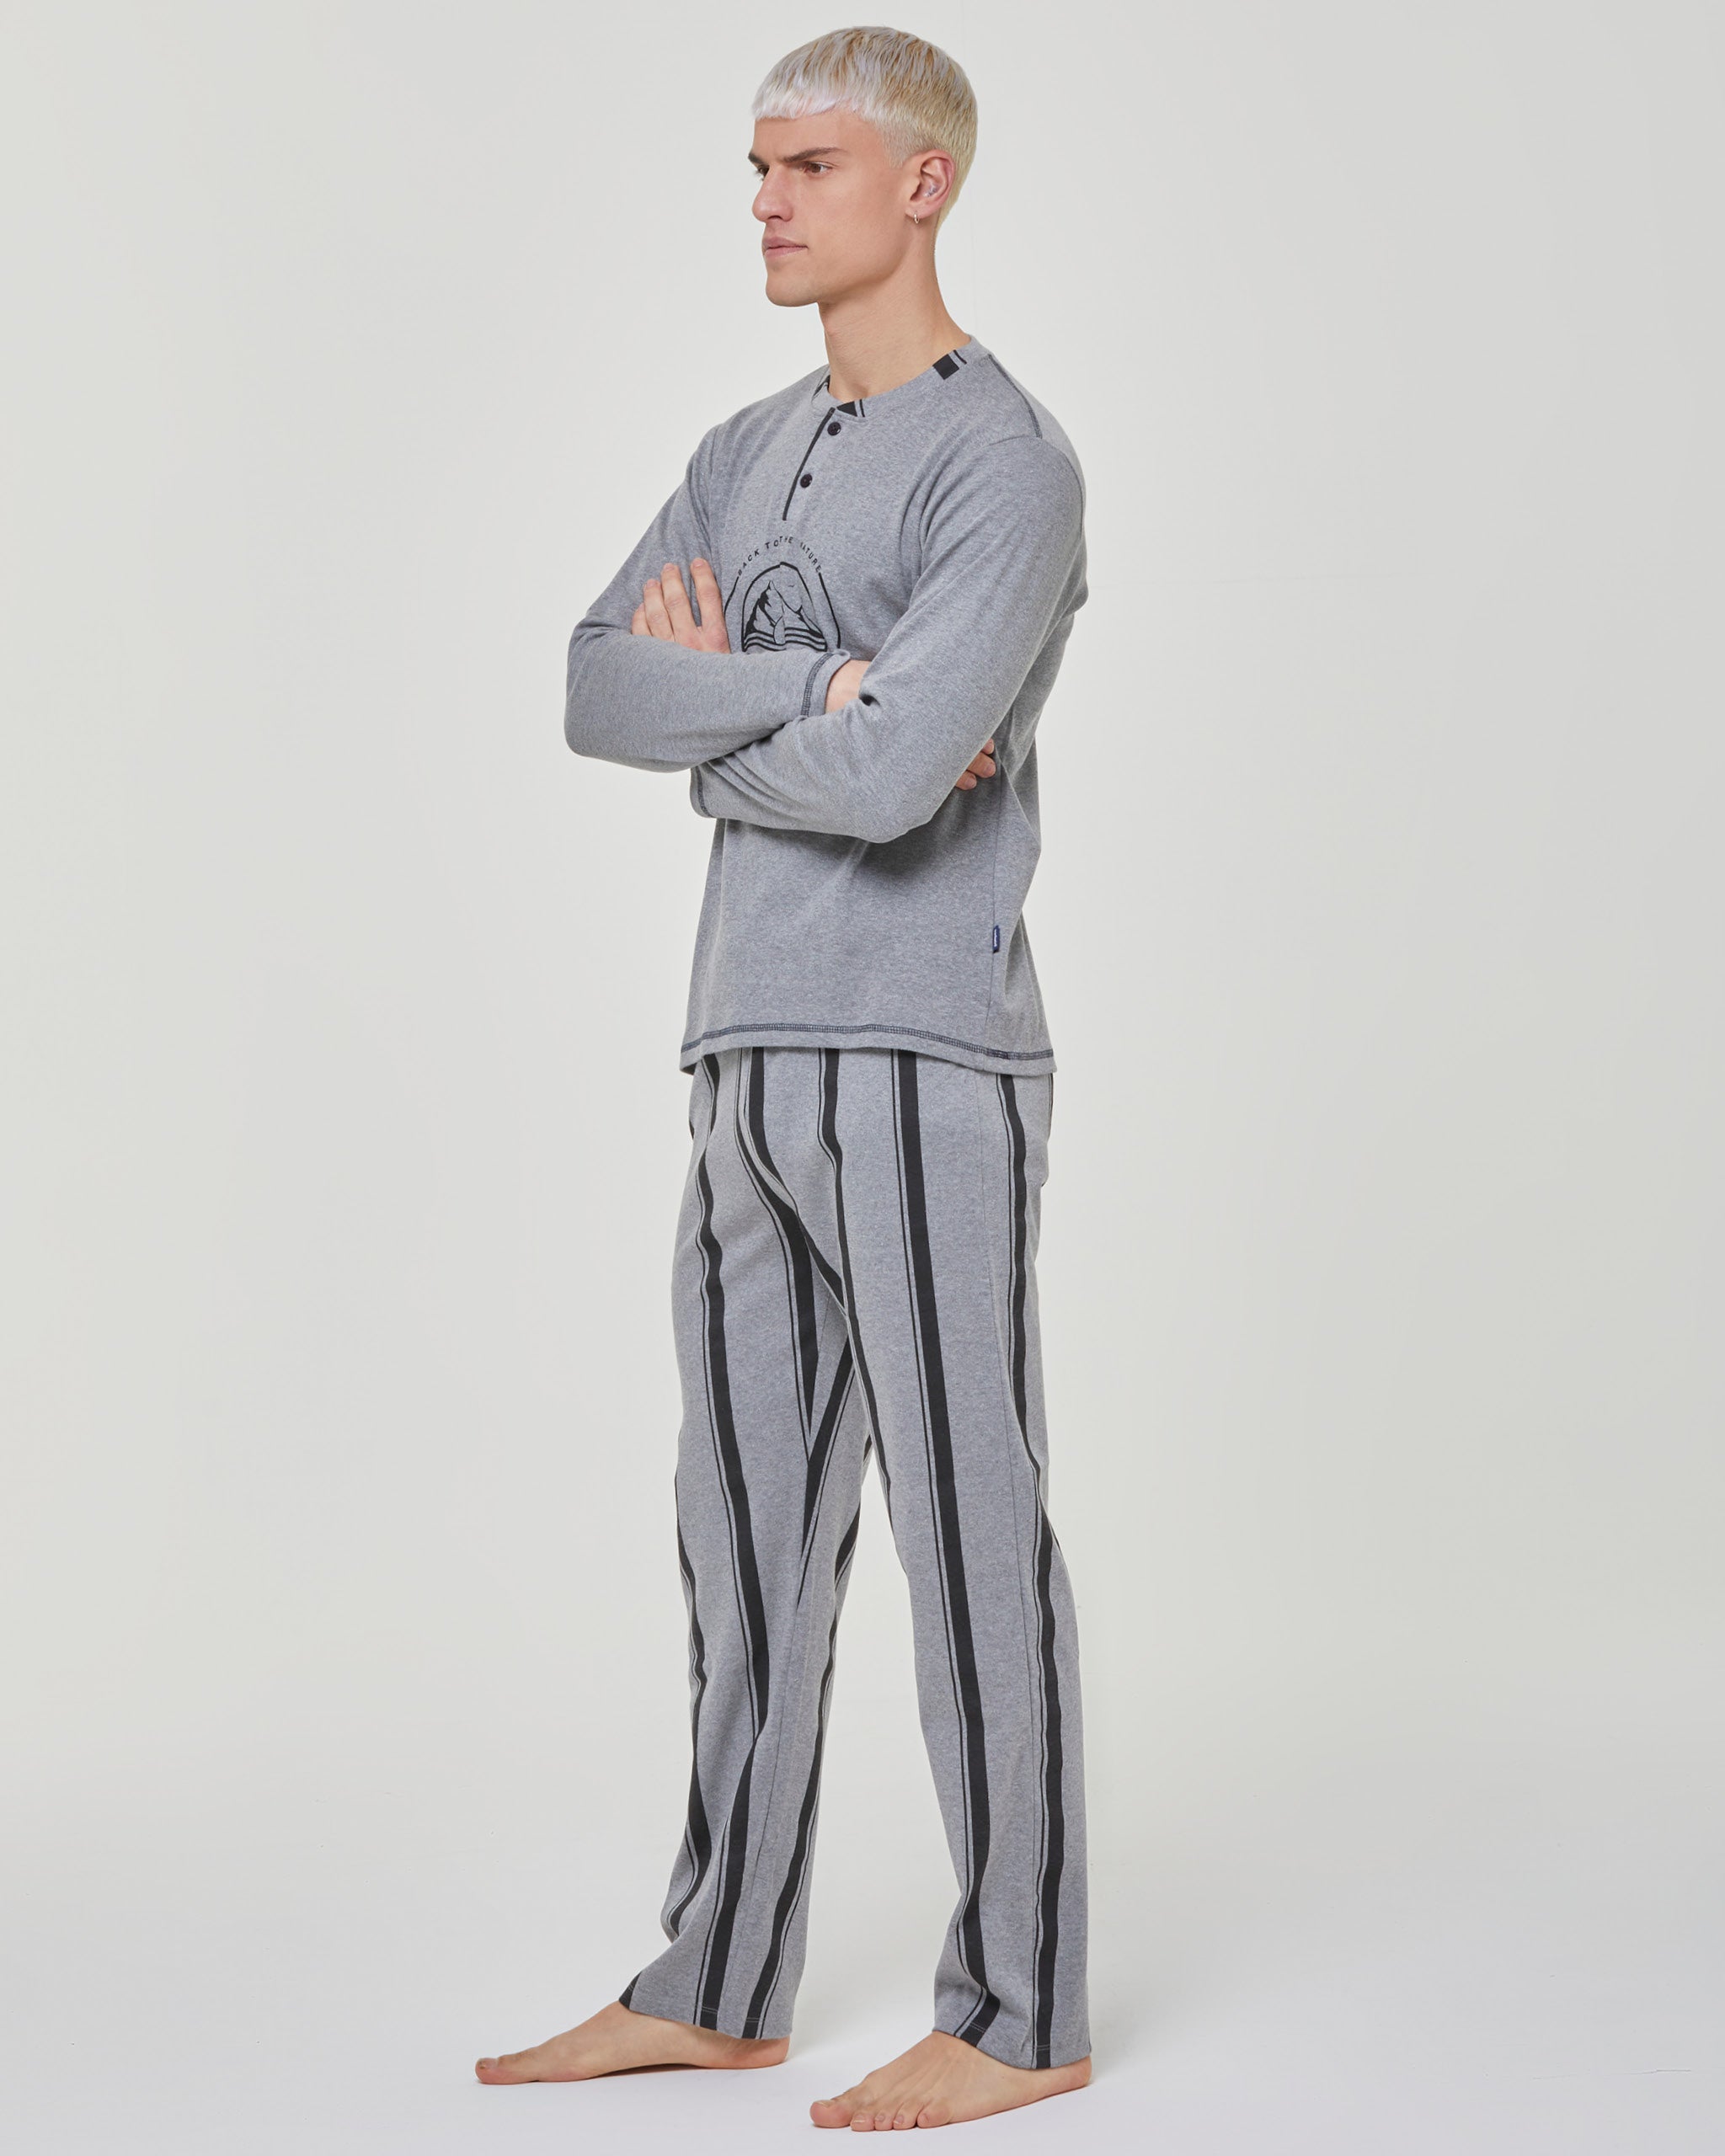 Langer Asiago-Pyjama aus Interlock-Baumwolle